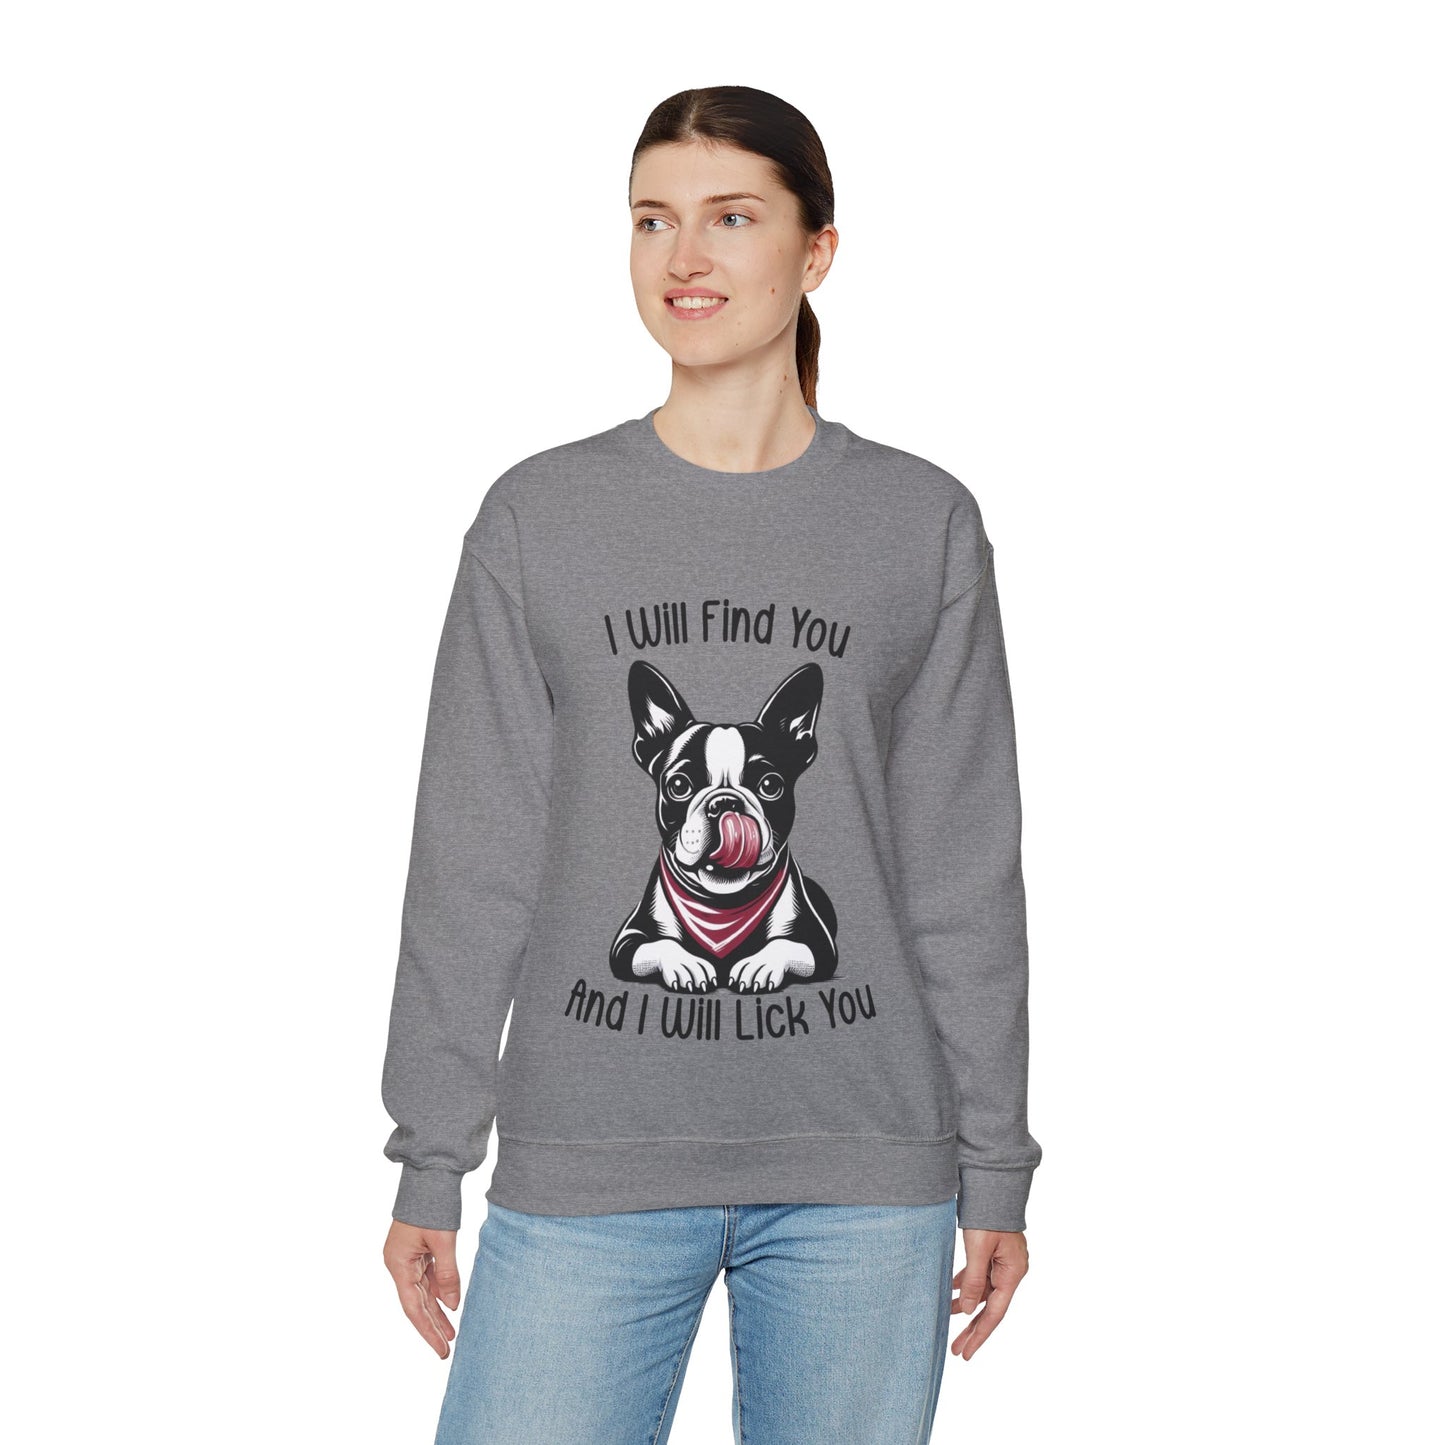 Tiny - Unisex Sweatshirt for Boston Terrier lovers